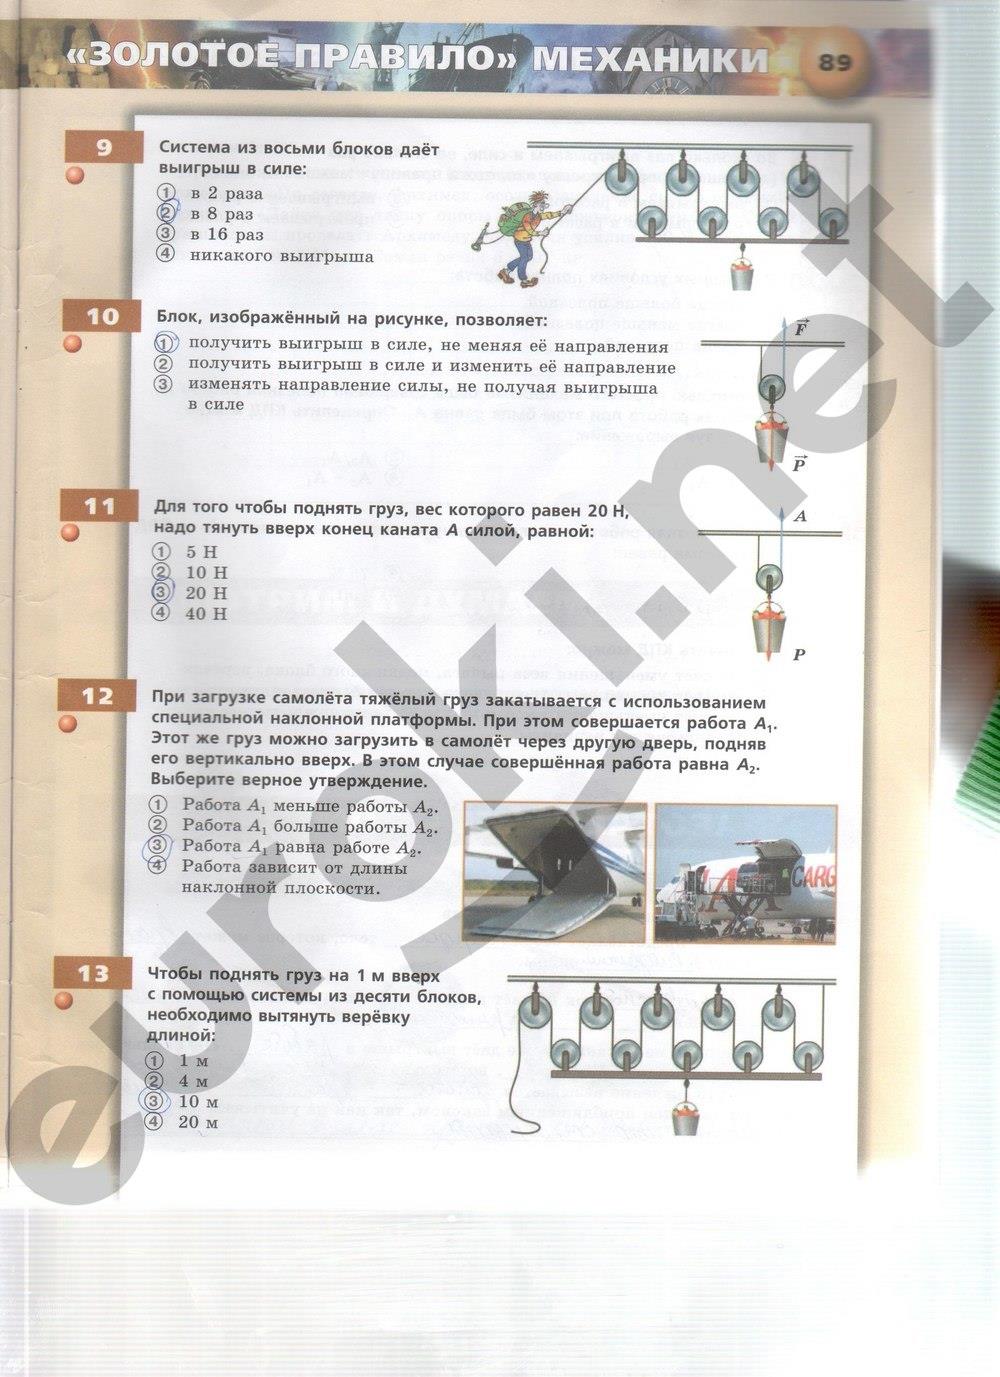 гдз 7 класс тетрадь-тренажер страница 89 физика Артеменков, Белага